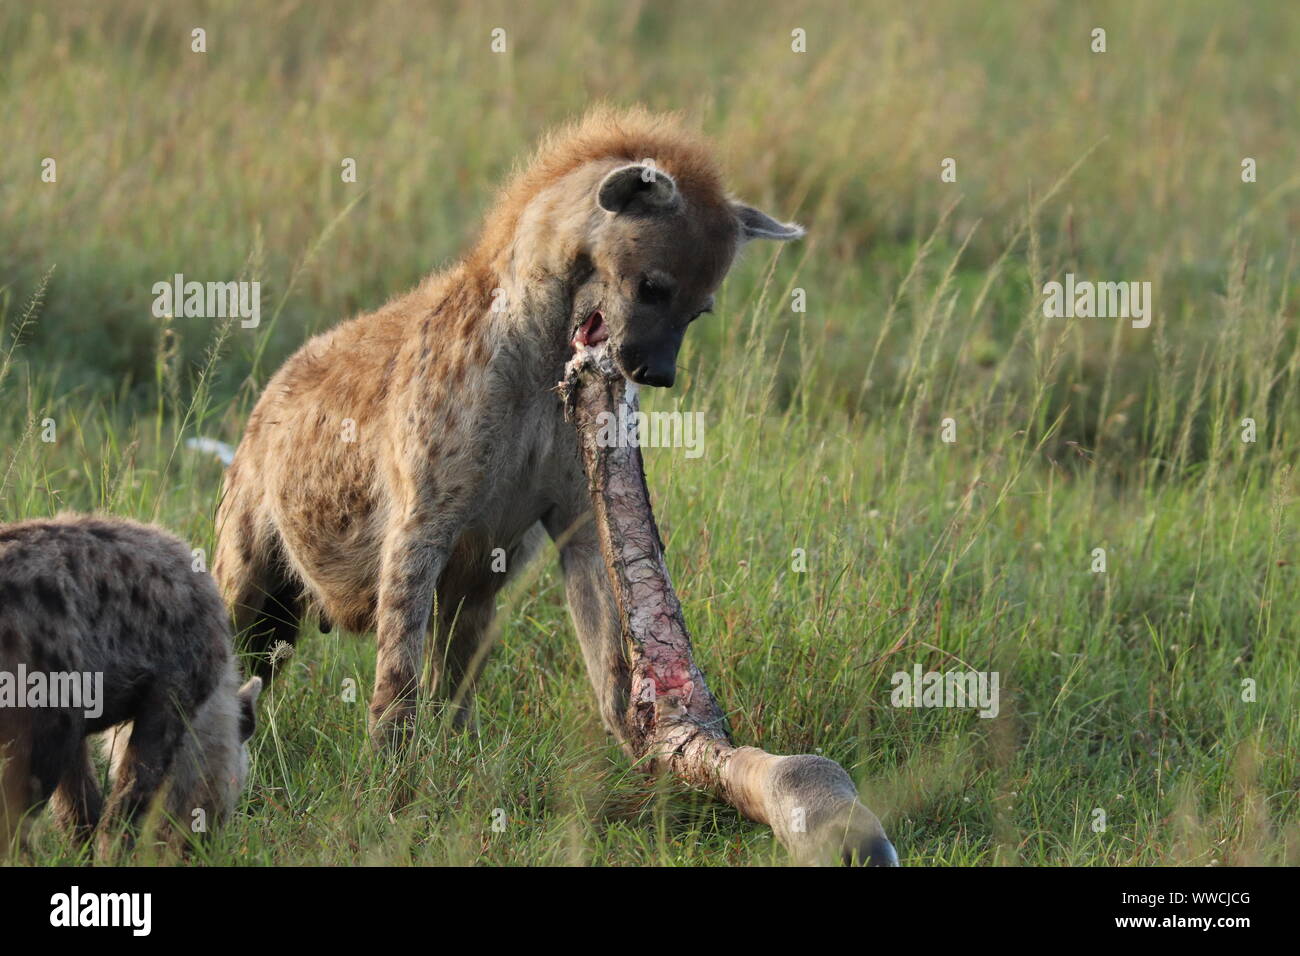 Spotted Hyena alimentándose de huesos, el Parque Nacional de Masai Mara, Kenya. Foto de stock